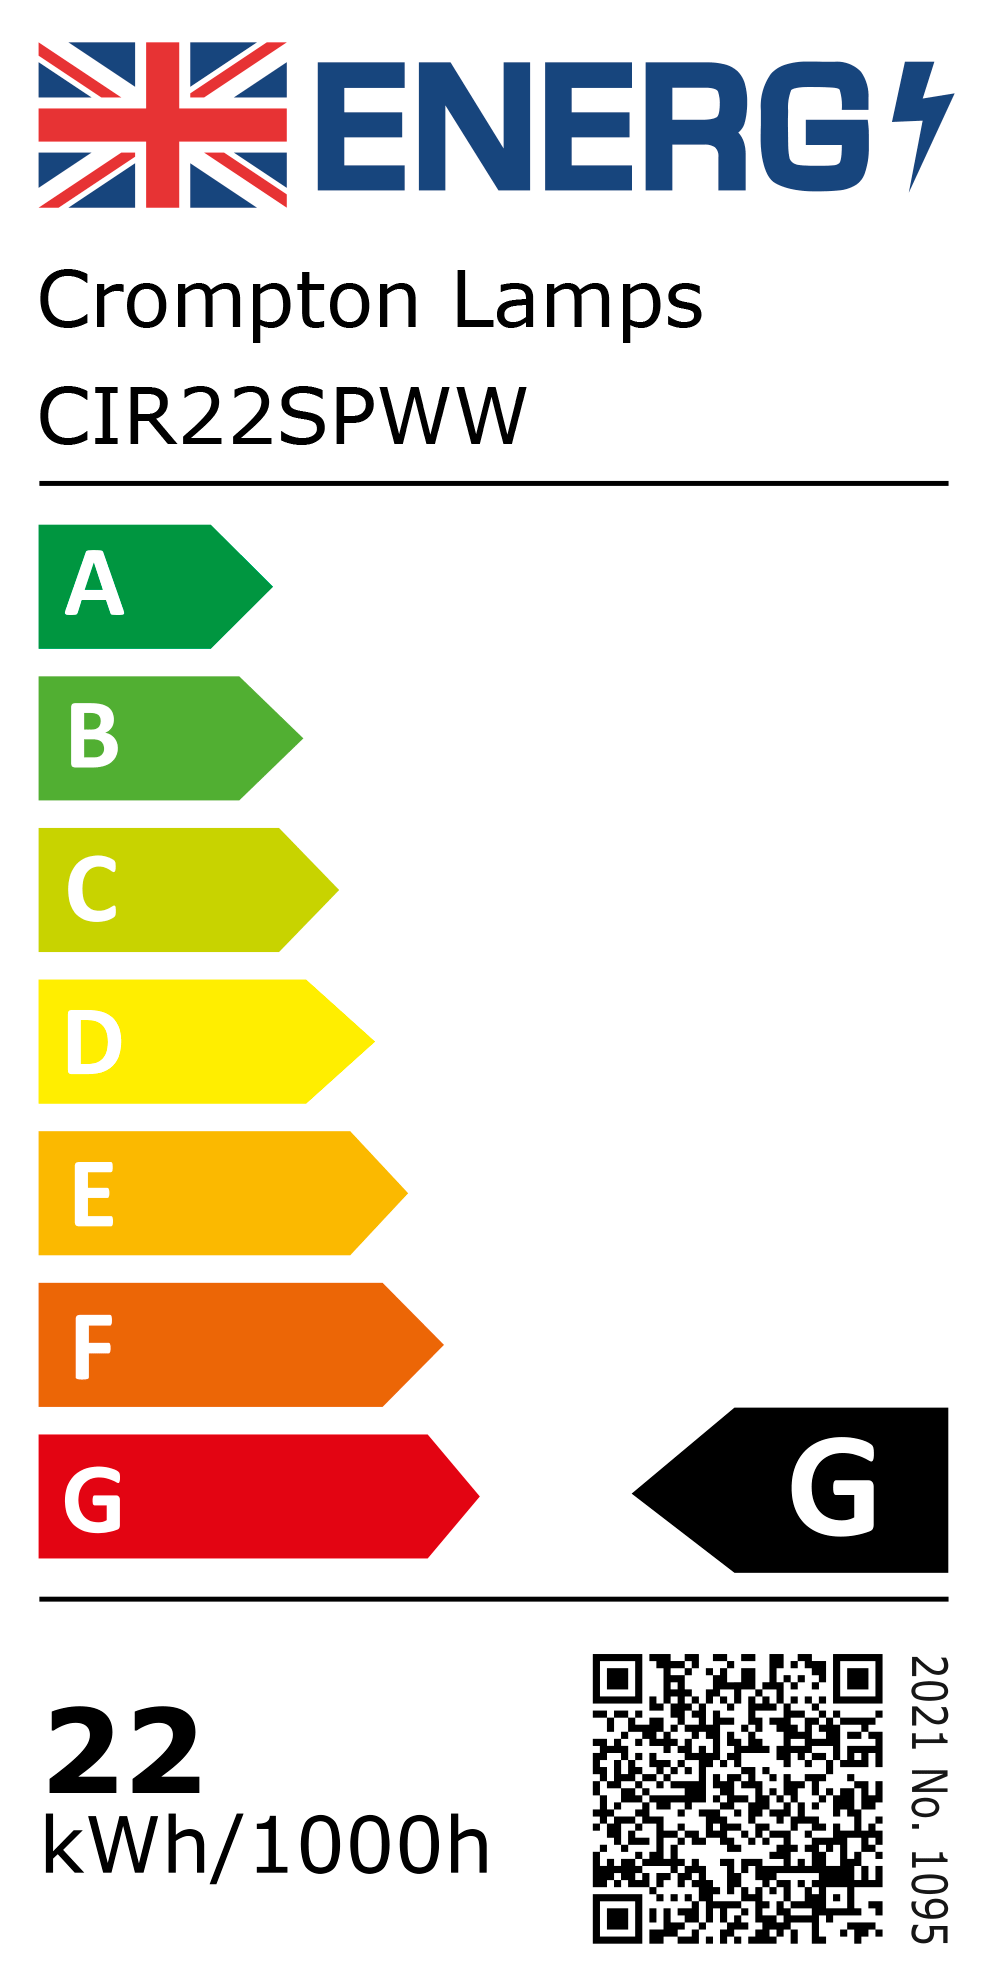 New 2021 Energy Rating Label: Stock Code CIR22SPWW